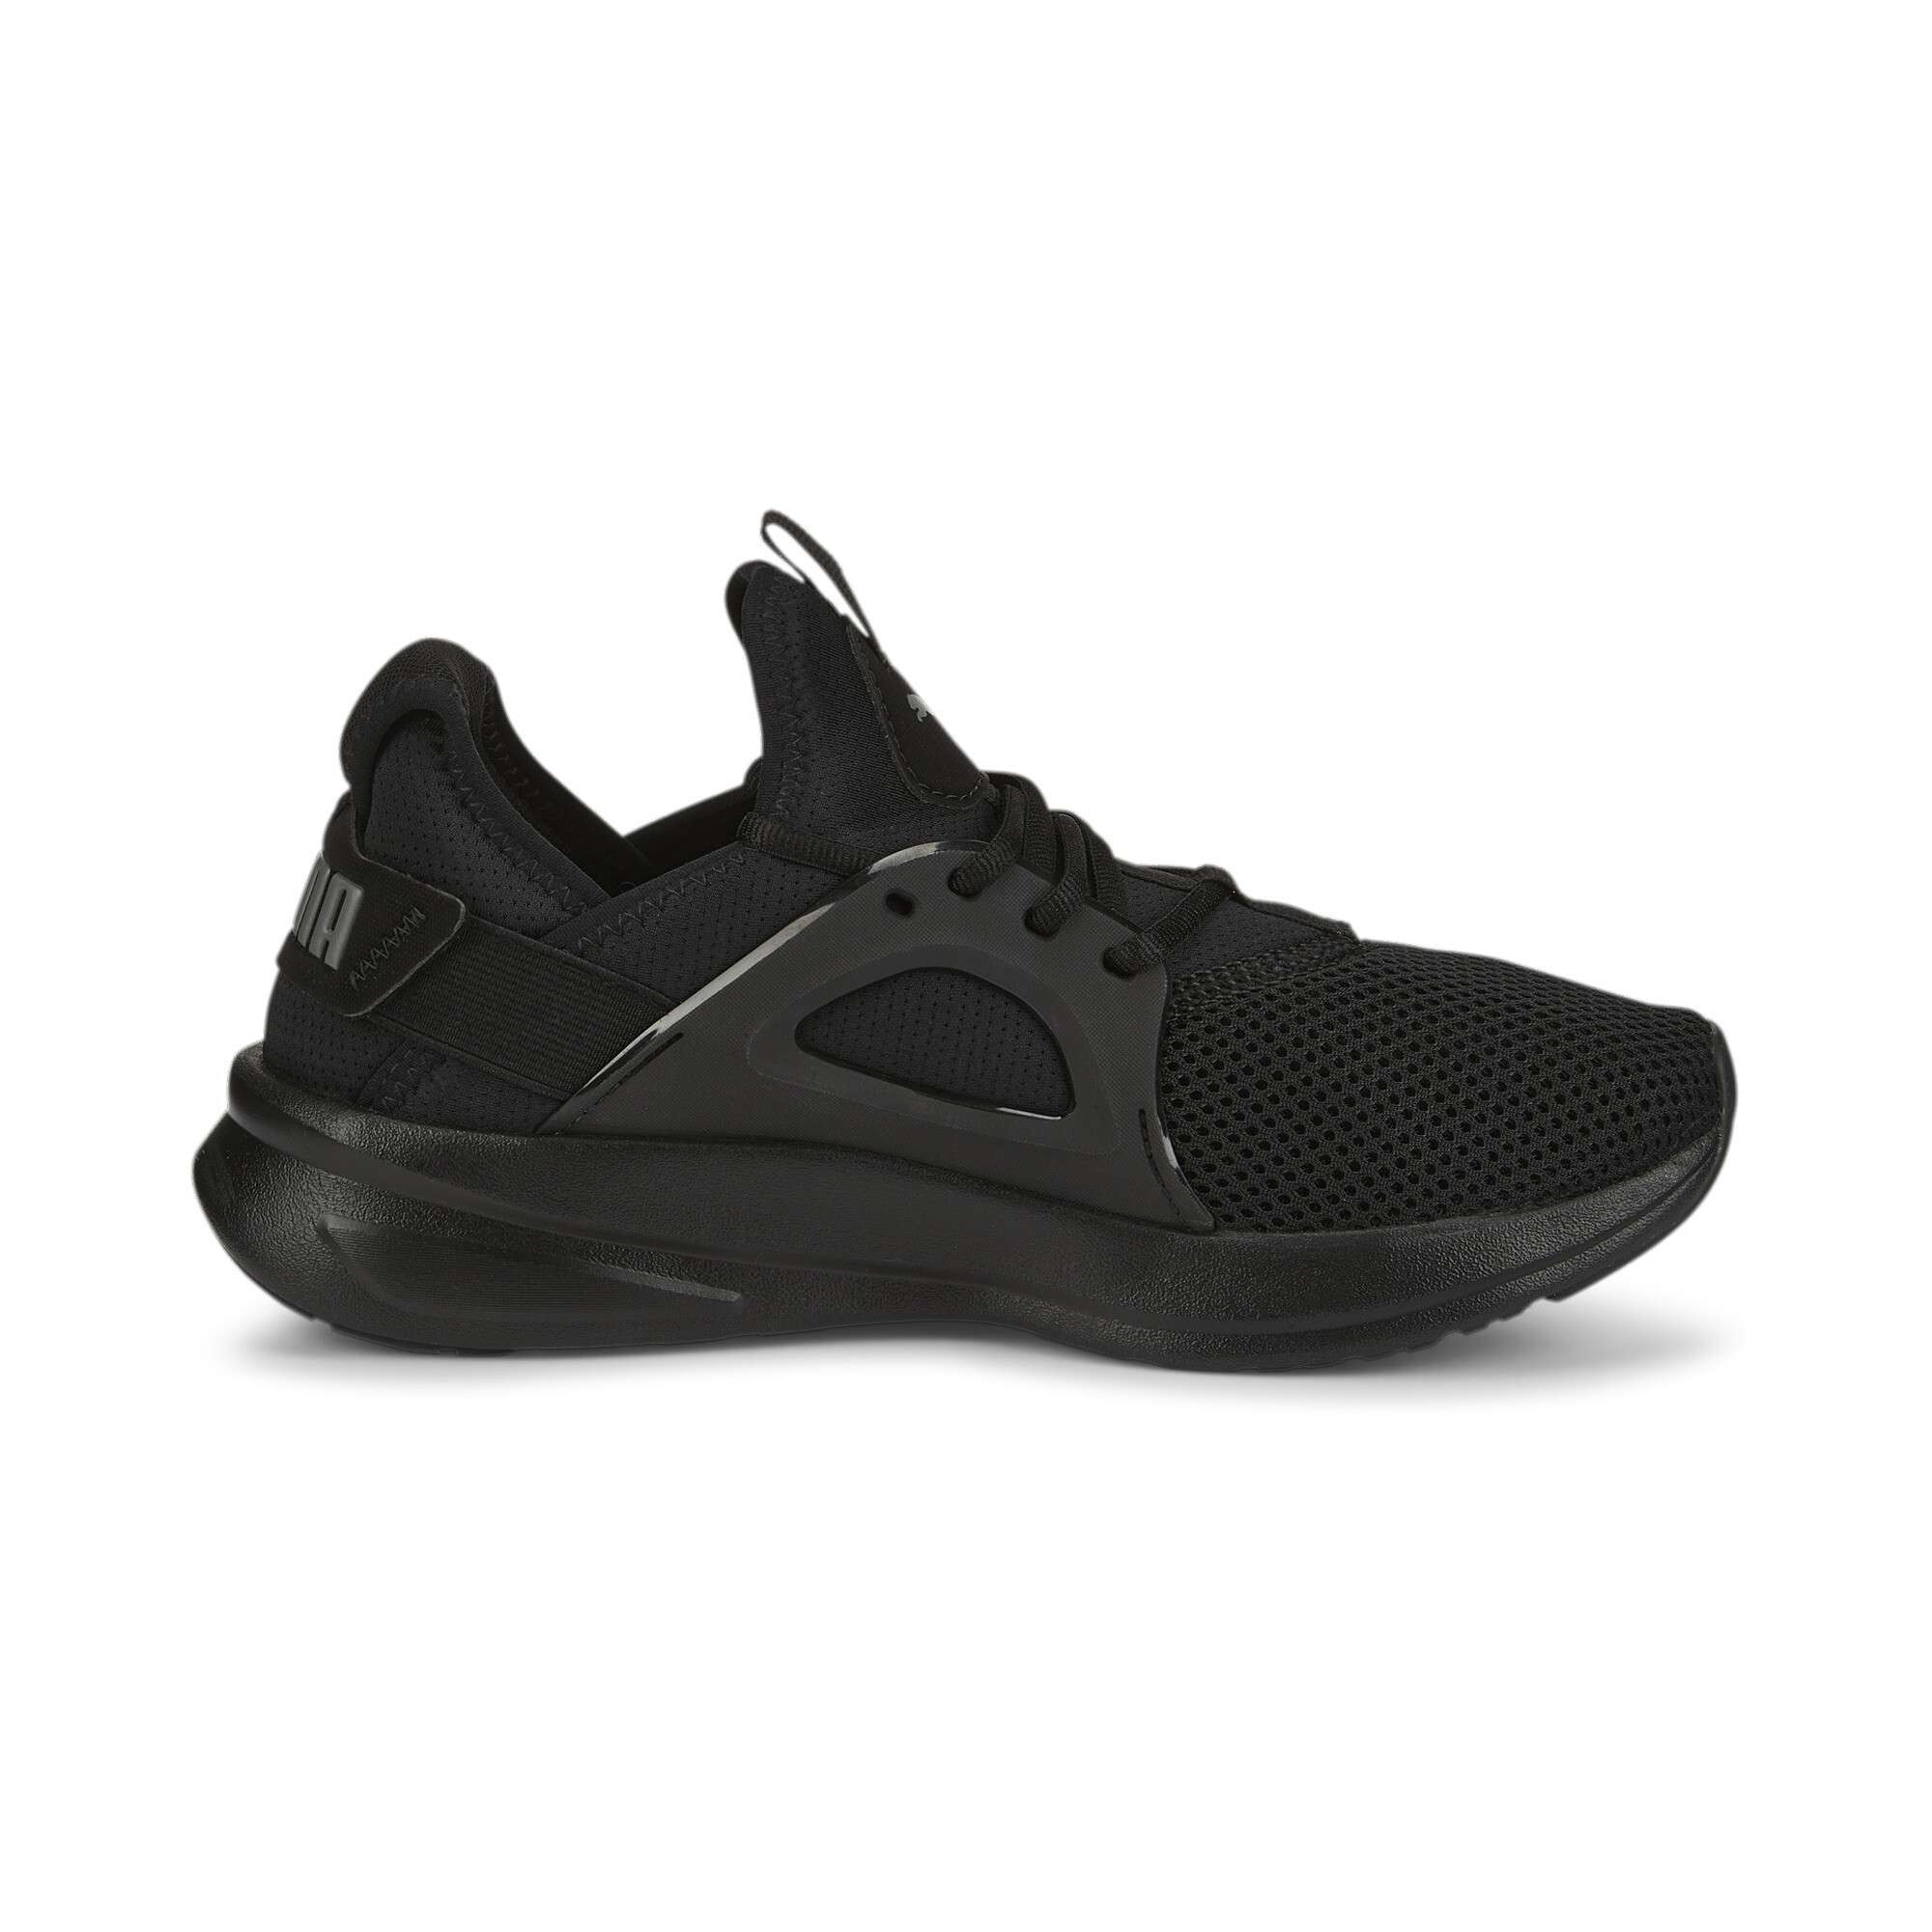 Men's Puma Softride Enzo Evo Running Shoes, Black, Size 37, Shoes